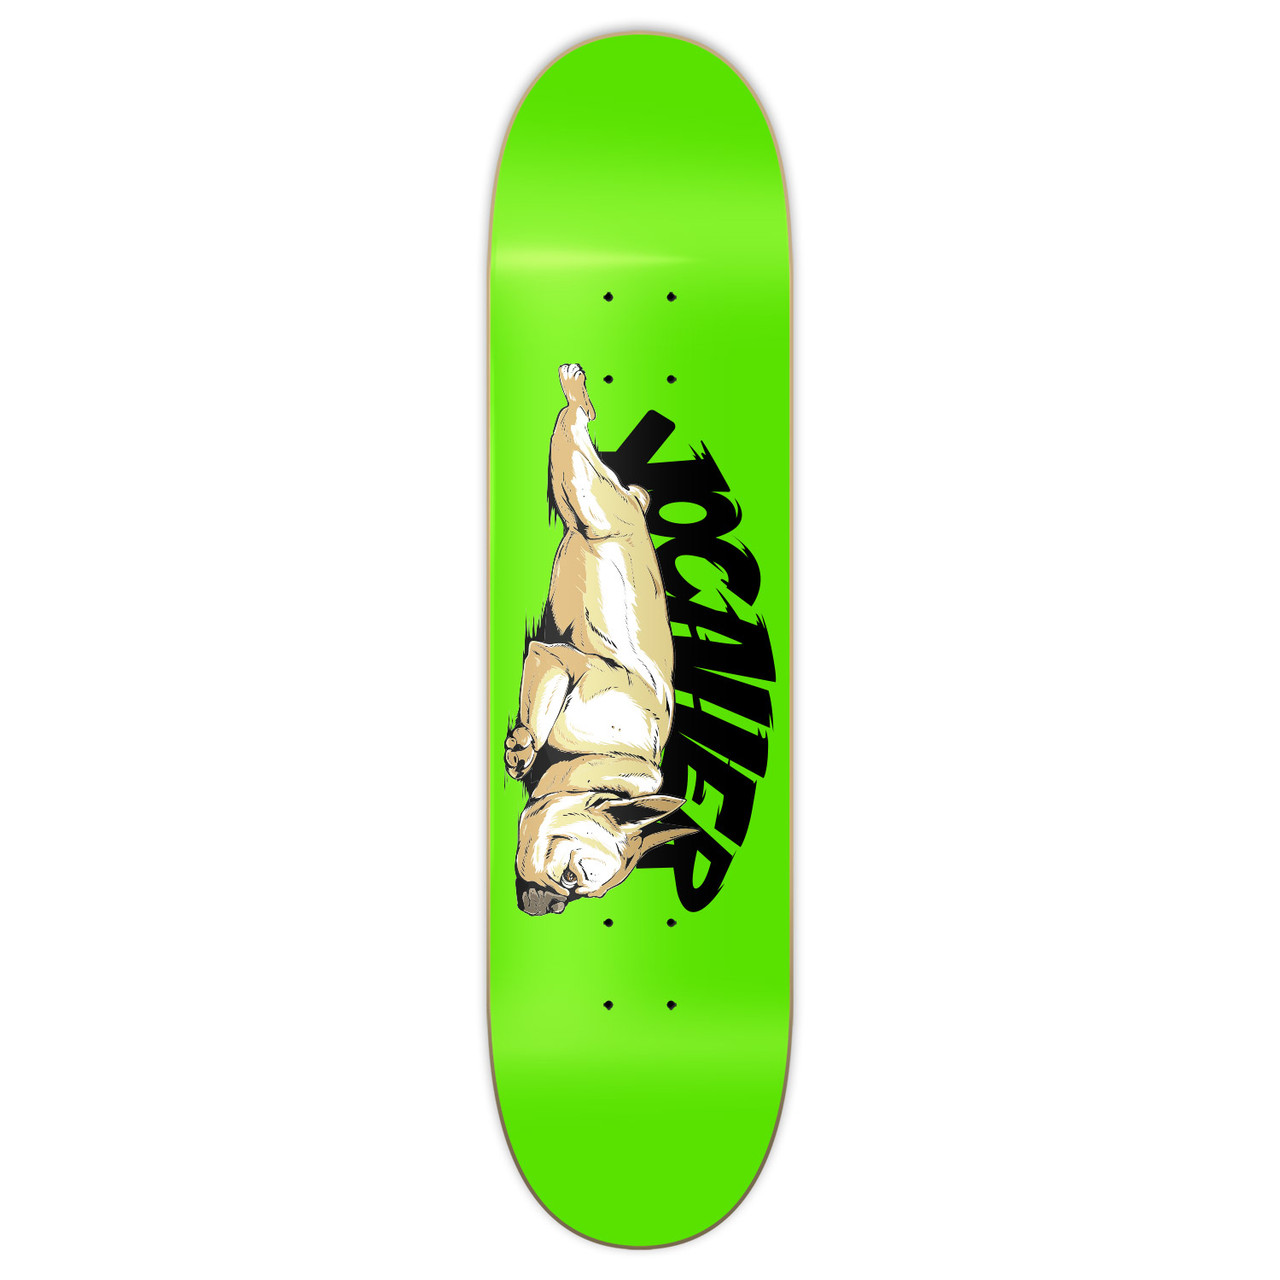 Shaded Caroline Intuition Yocaher Graphic Skateboard Deck - Lazy French Bulldog